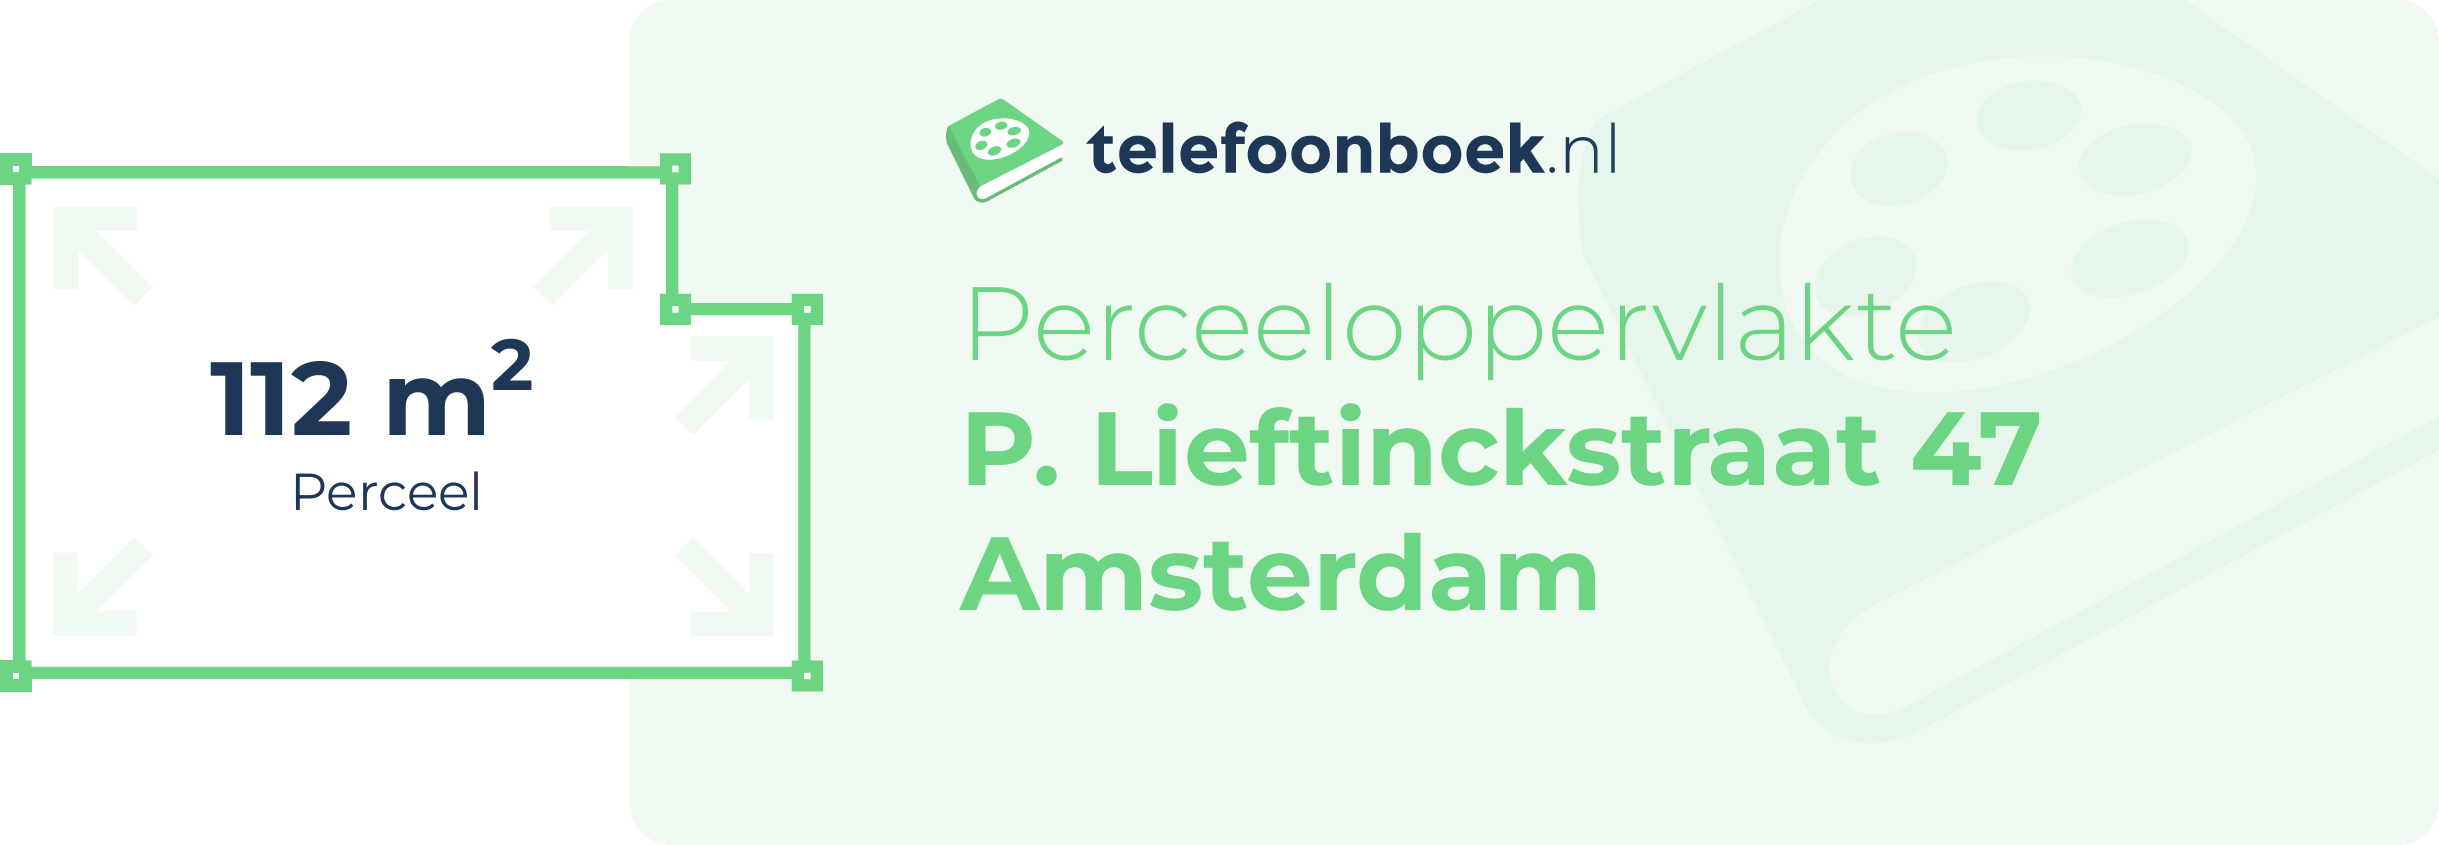 Perceeloppervlakte P. Lieftinckstraat 47 Amsterdam